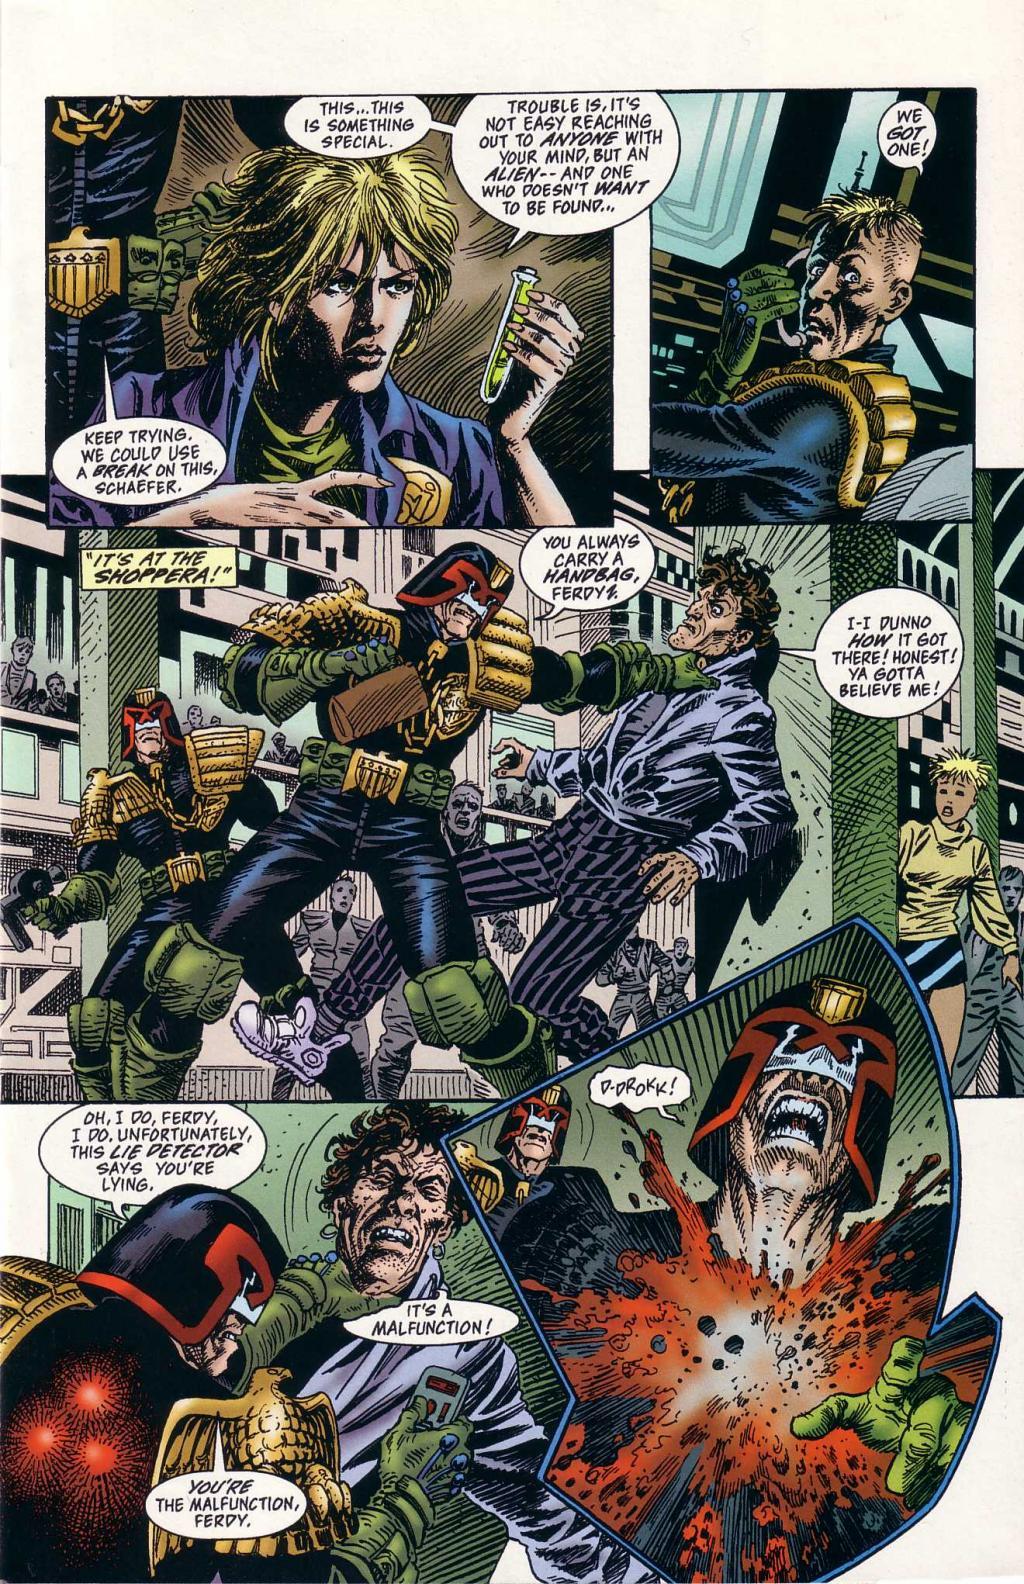 Predator Vs Judge Dredd Pics, Comics Collection